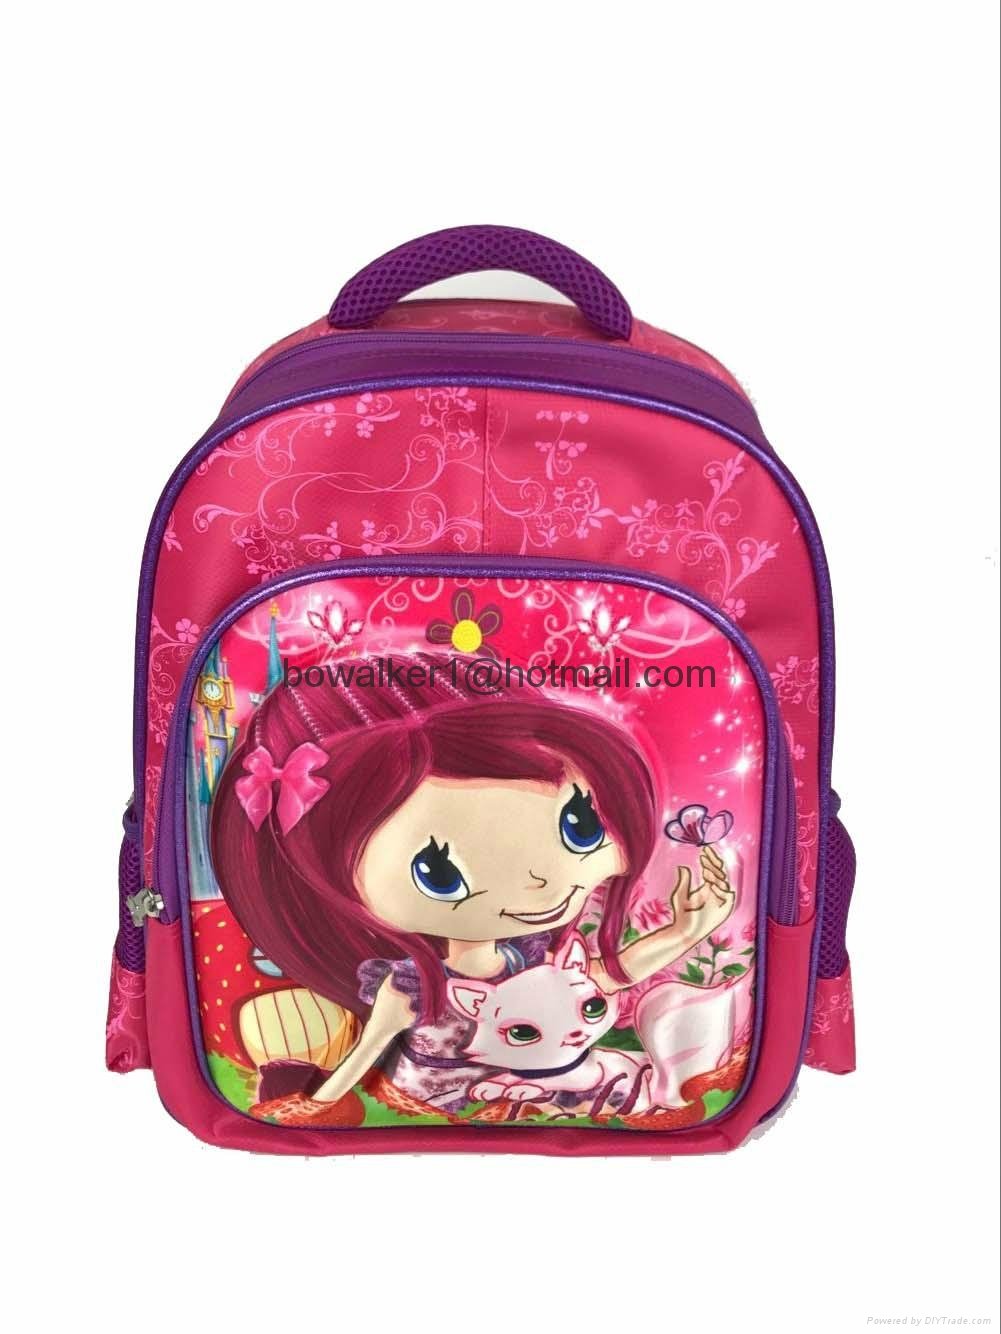 Girl beautiful school bag, school backpack bag, children's bag for students 3